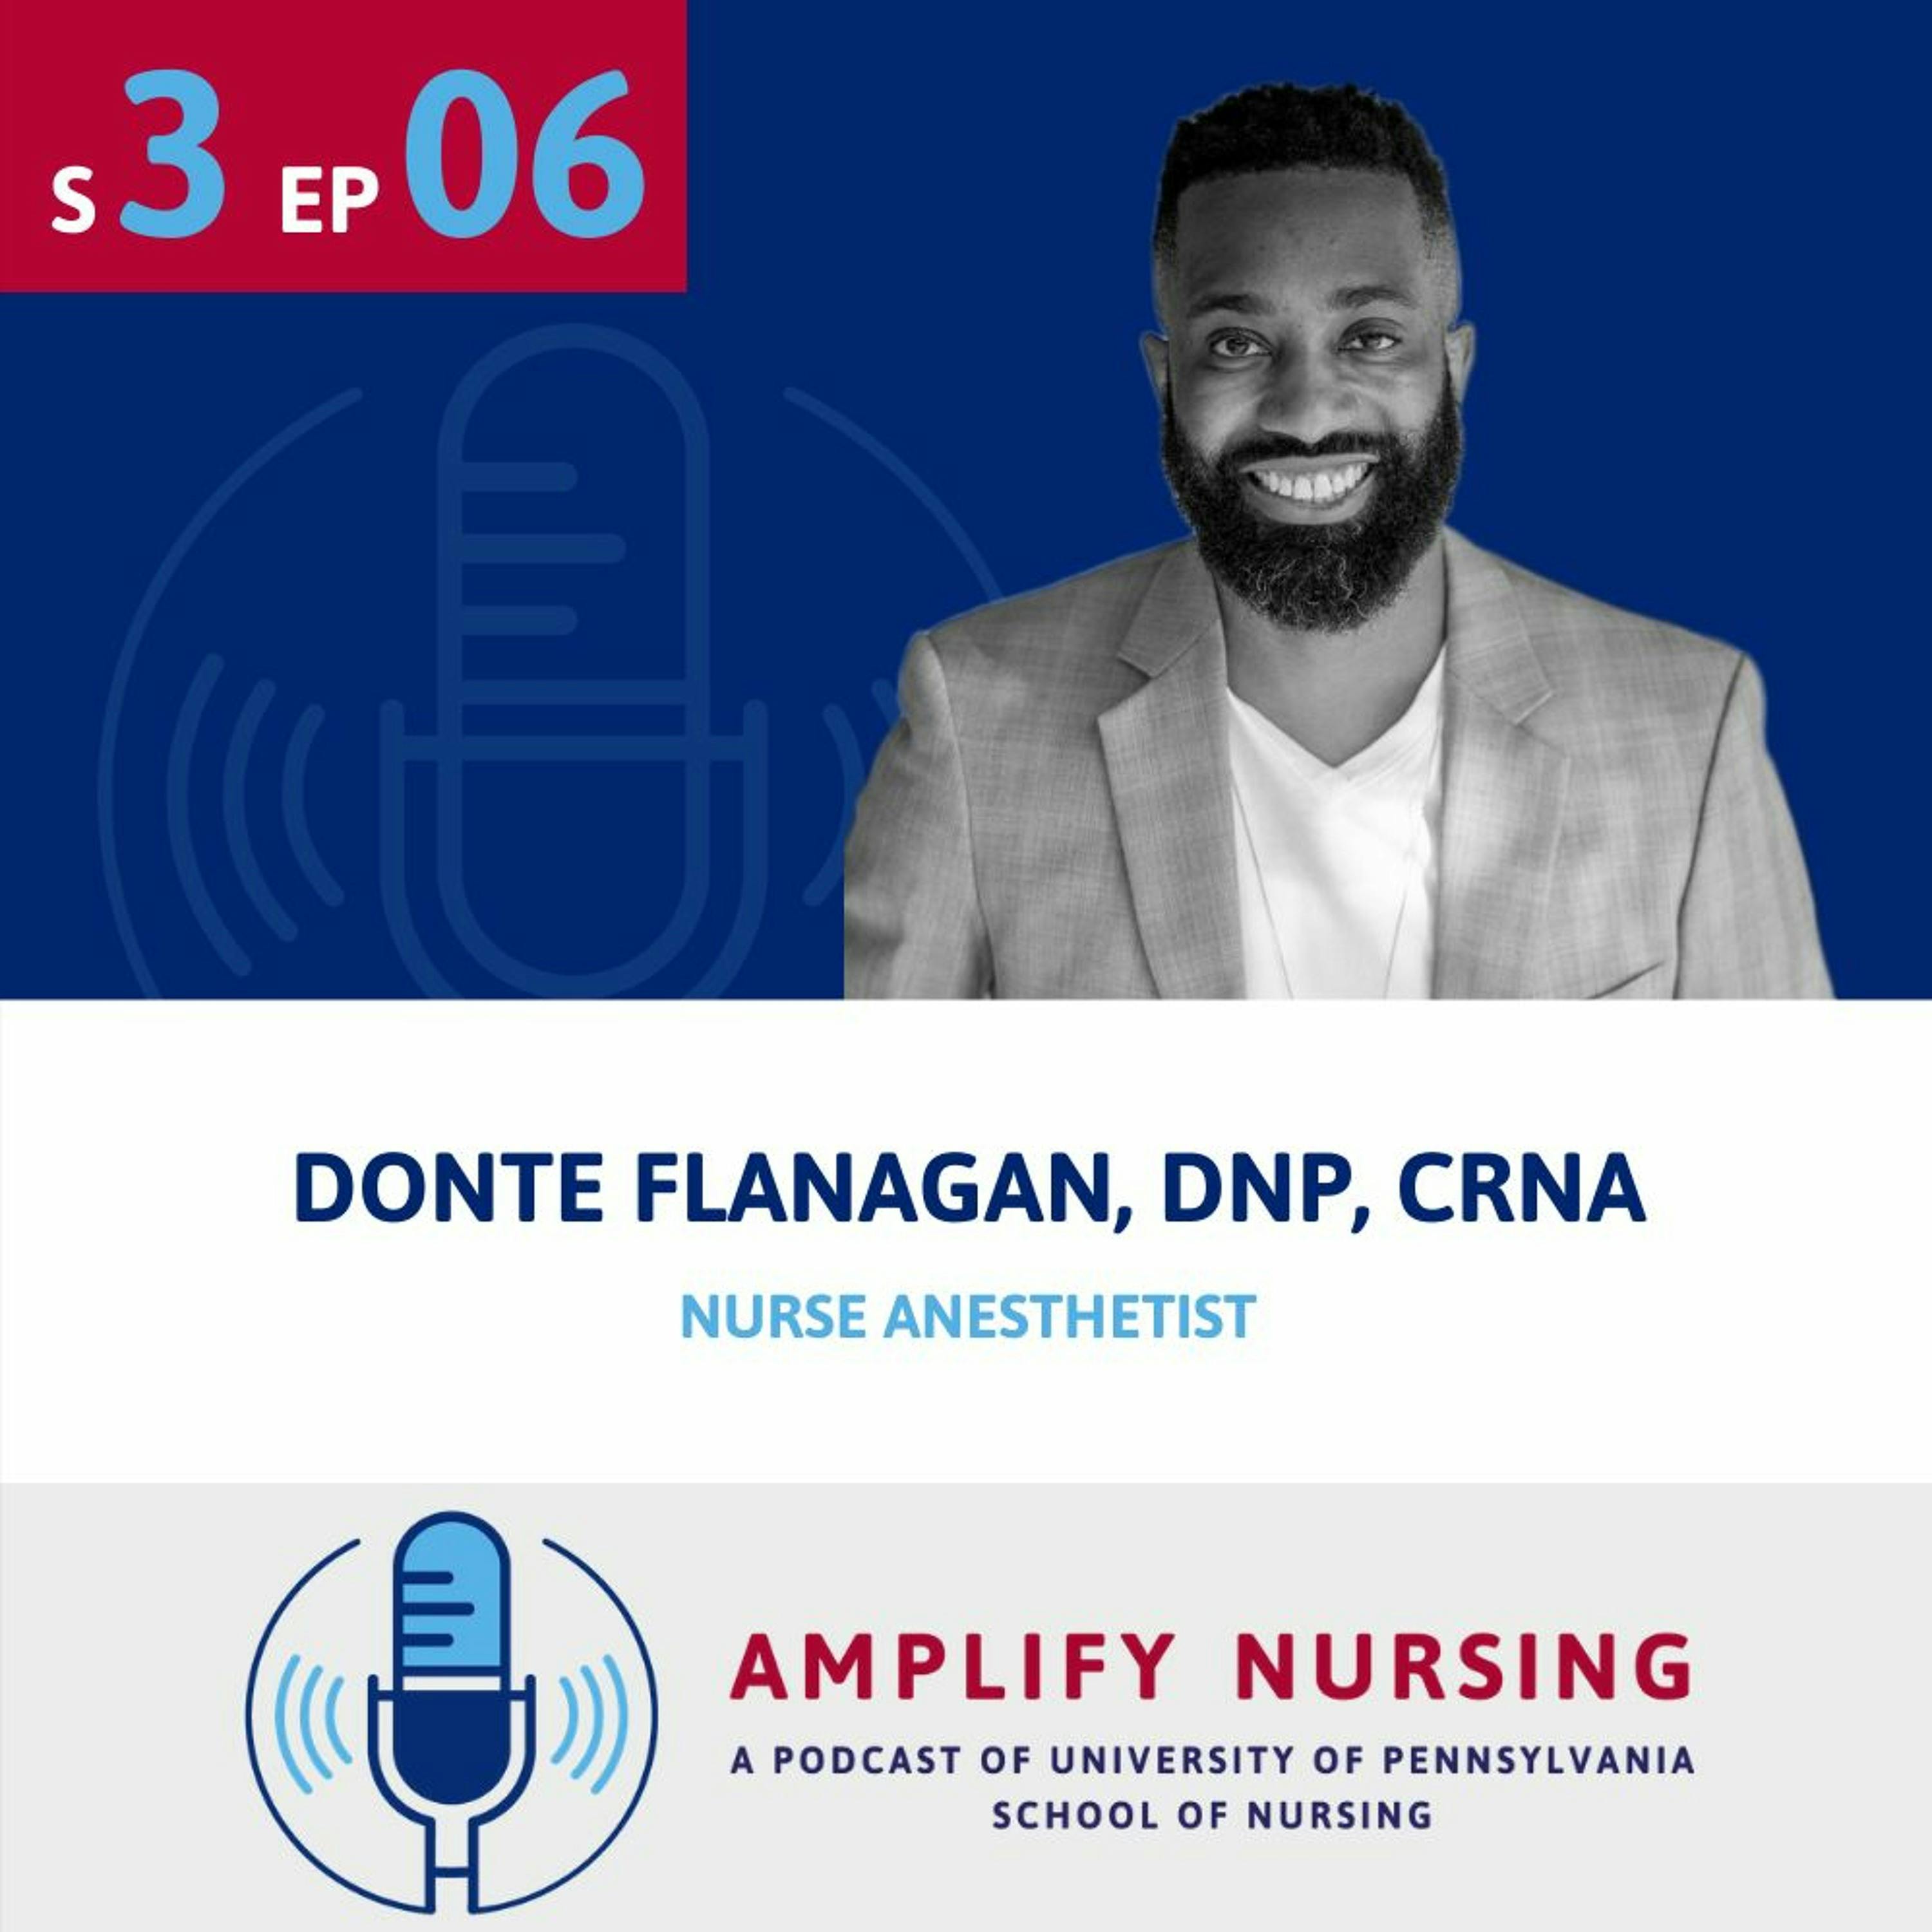 Amplify Nursing: Season 3 Episode 06: Donte Flanagan